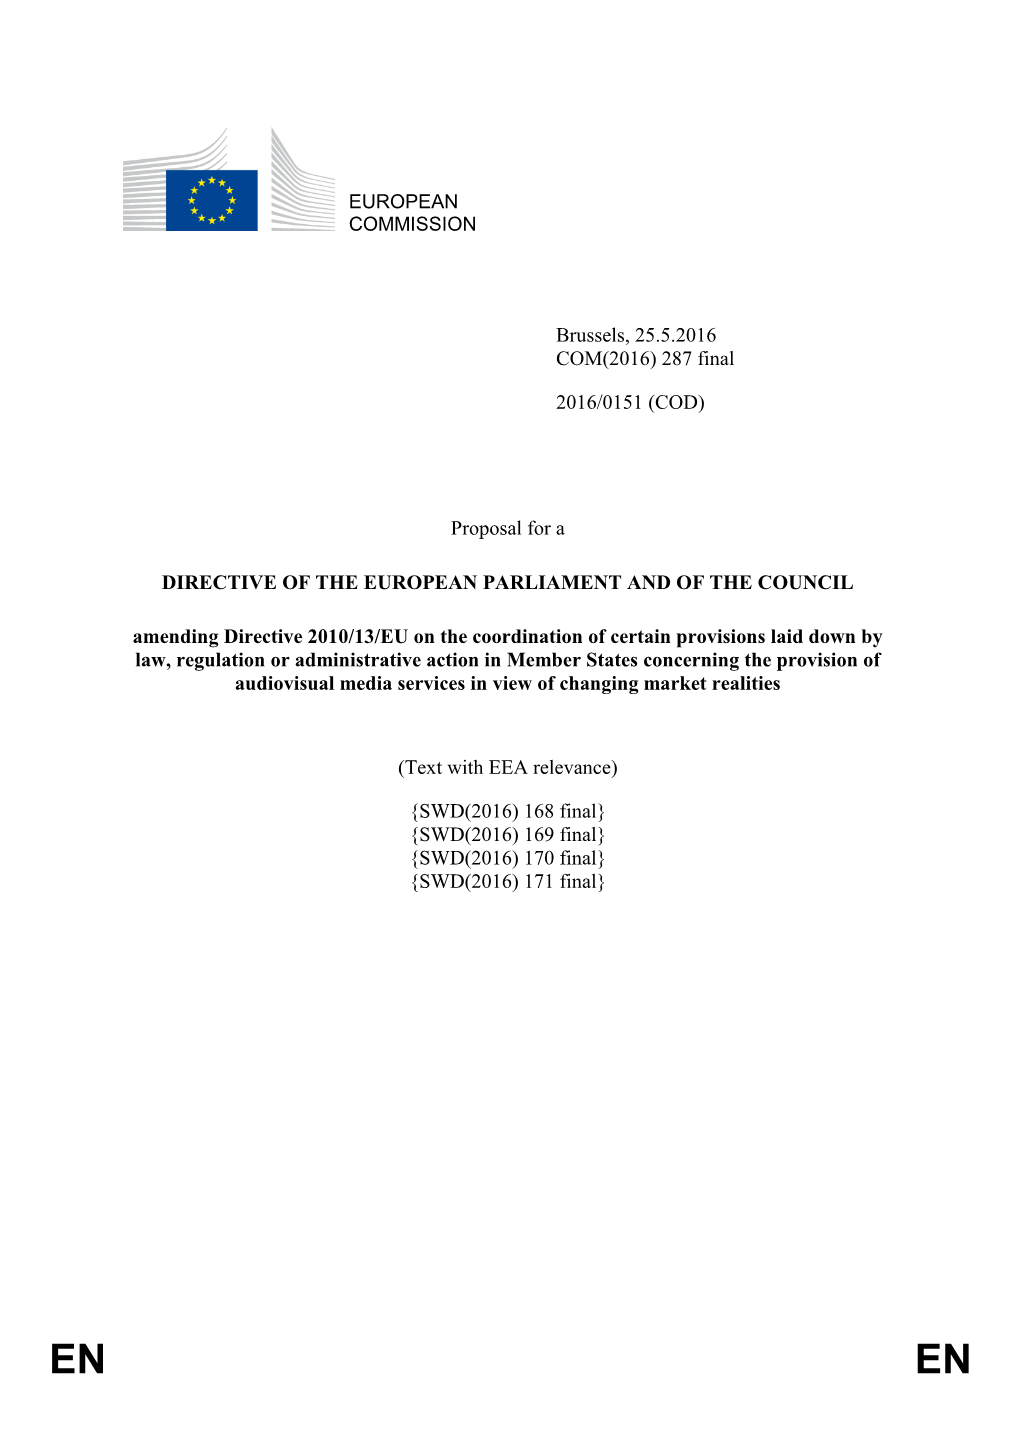 EUROPEAN COMMISSION Brussels, 25.5.2016 COM(2016